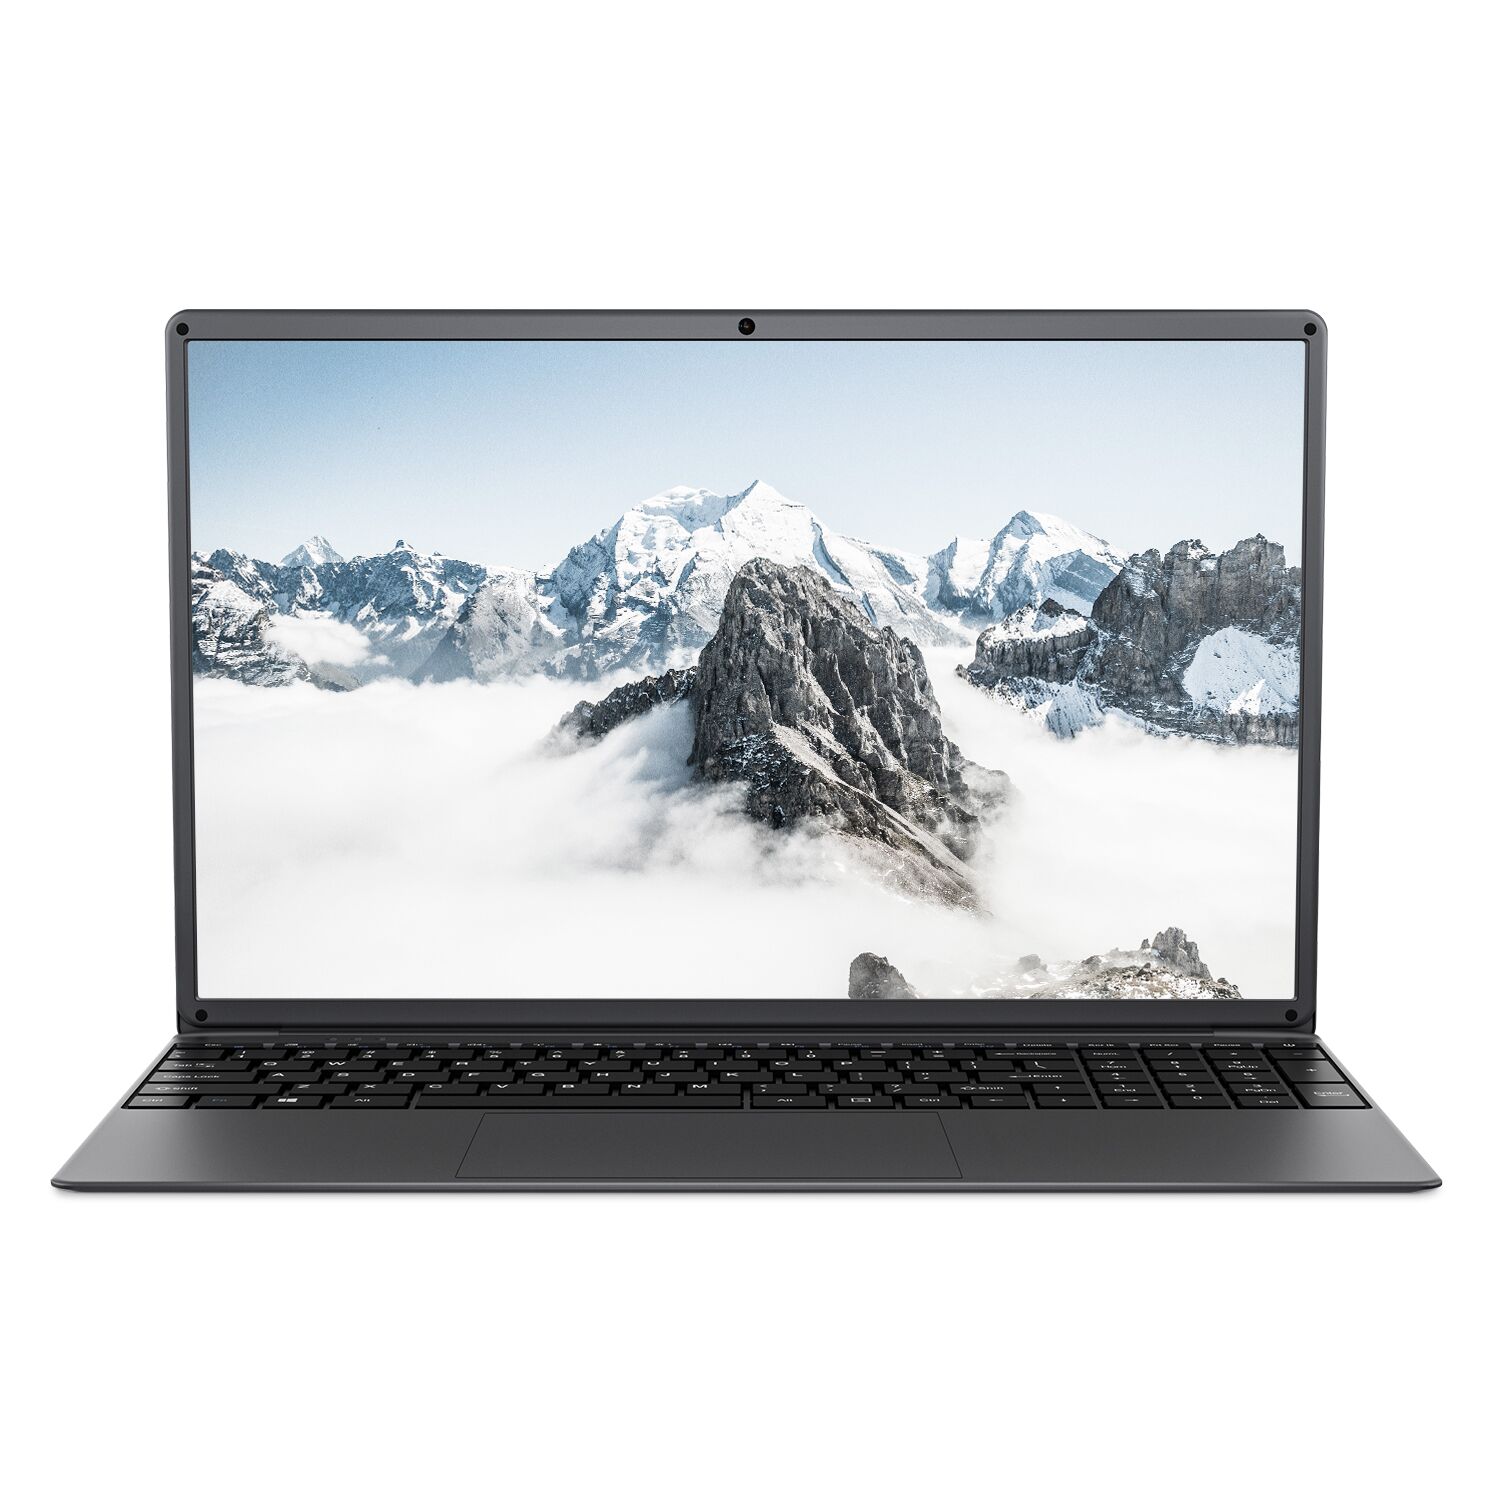 BMAX S15 Laptop 15.6 inch Intel Gemini Lake N4100 Intel UHD Graphics 600 8GB LPDDR4 RAM 128GB SSD 178° Viewing Angle Narrow Bezel Notebook 2